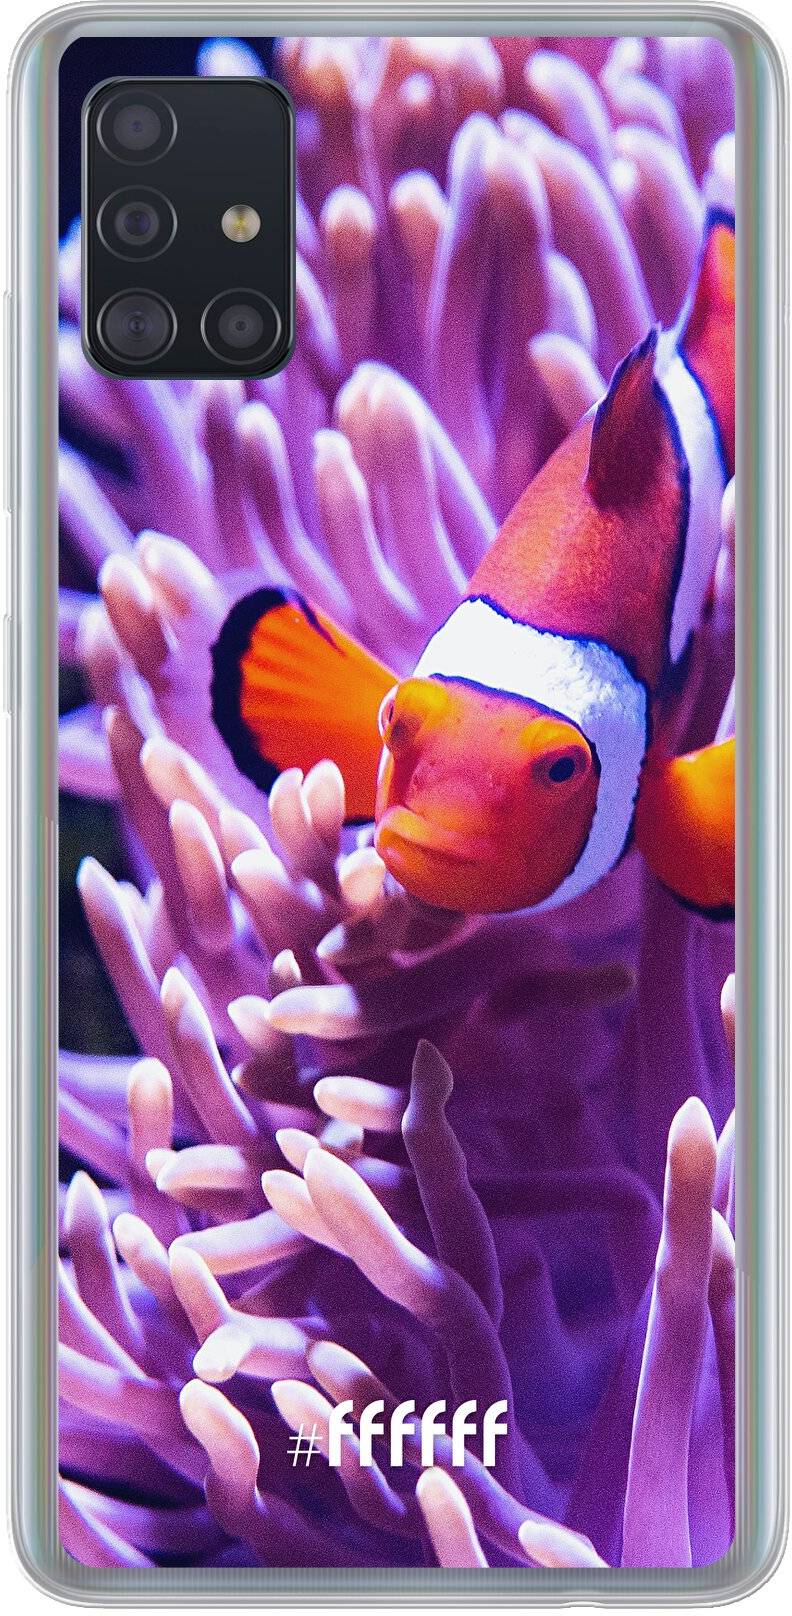 Nemo Galaxy A51